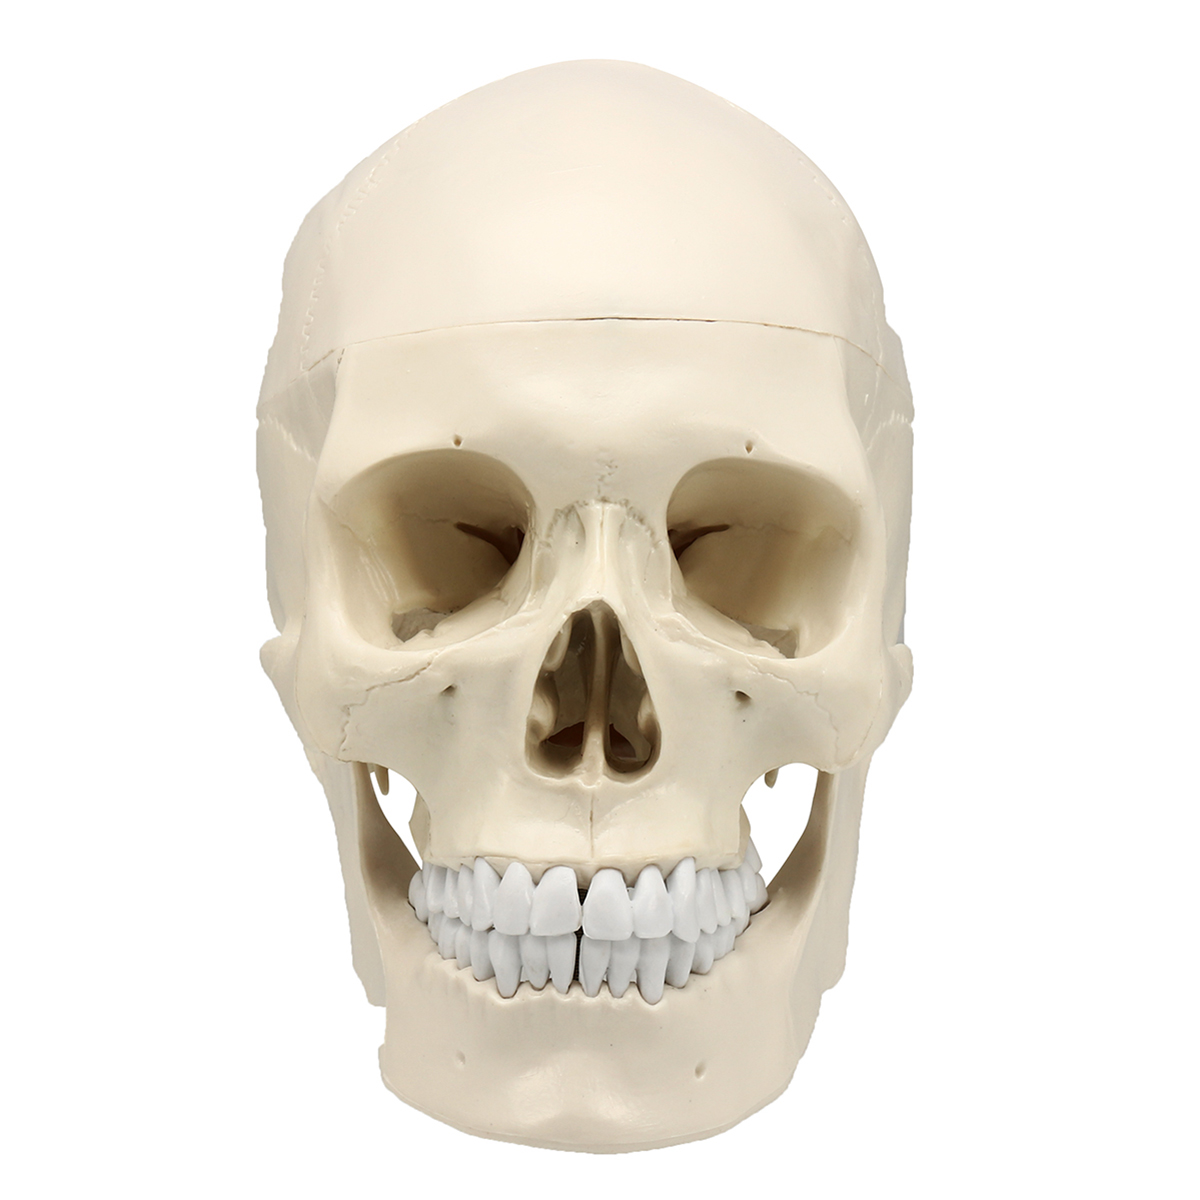 

Life Size Human Anatomical Anatomy Resin Head Skeleton Lifesize Skull Medical Teaching Model